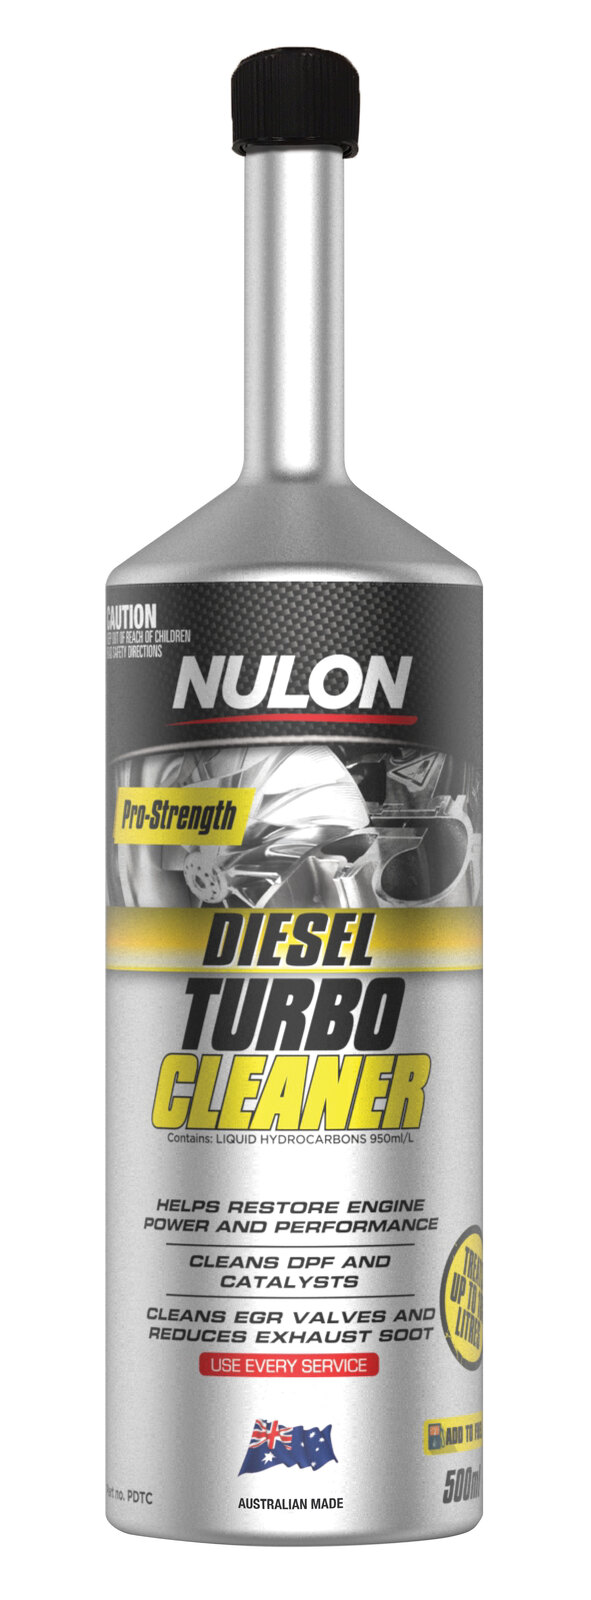 NULON 500ml Pro-Strength Diesel Turbo Cleaner, Each